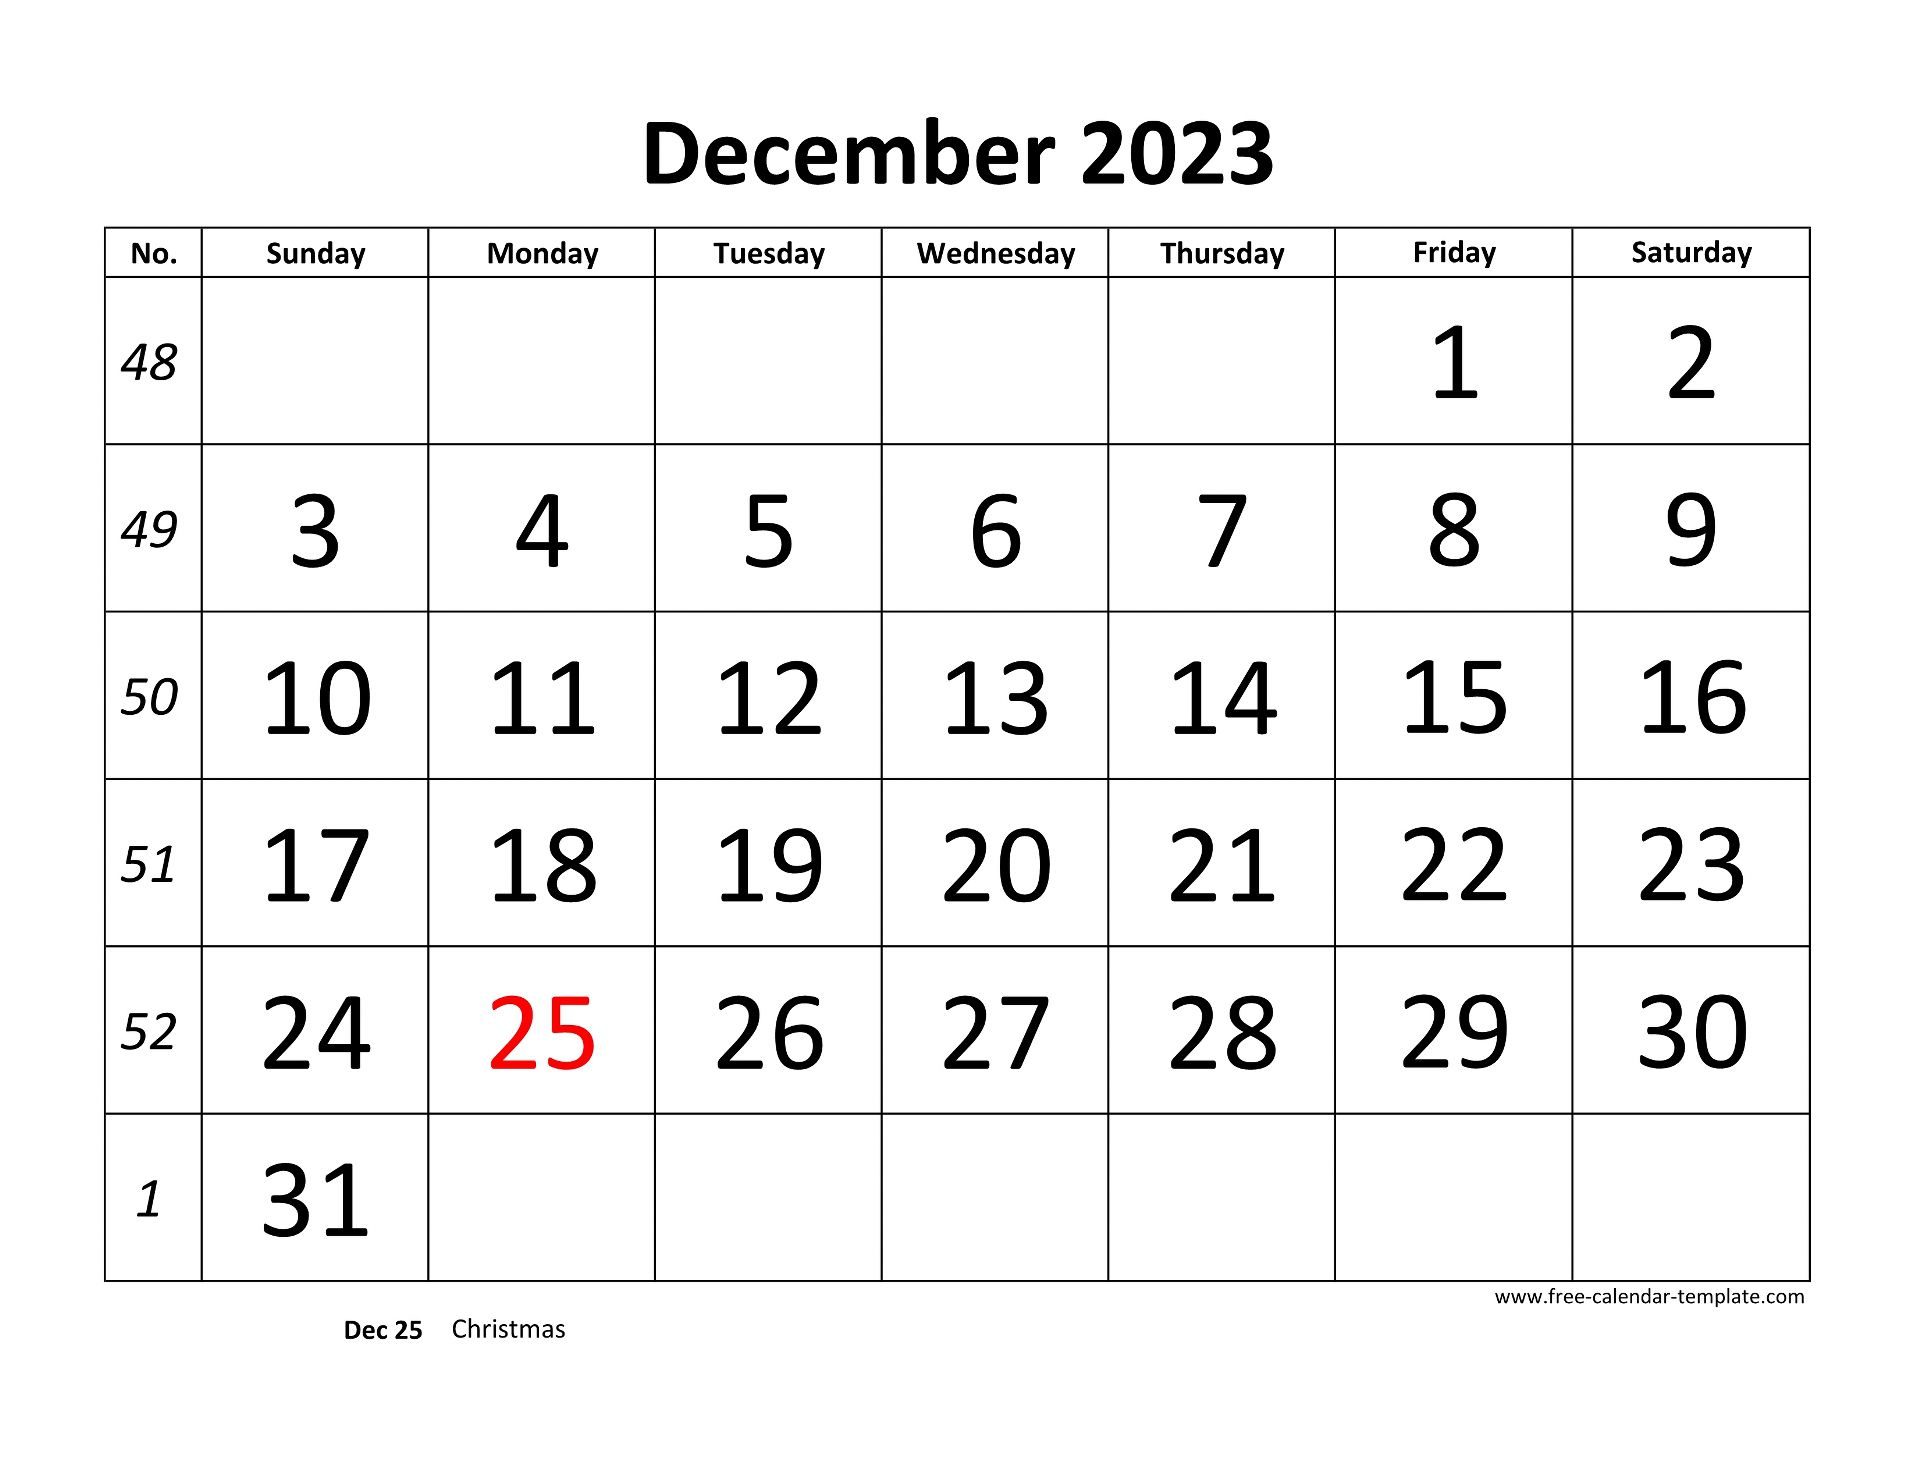 December 2023